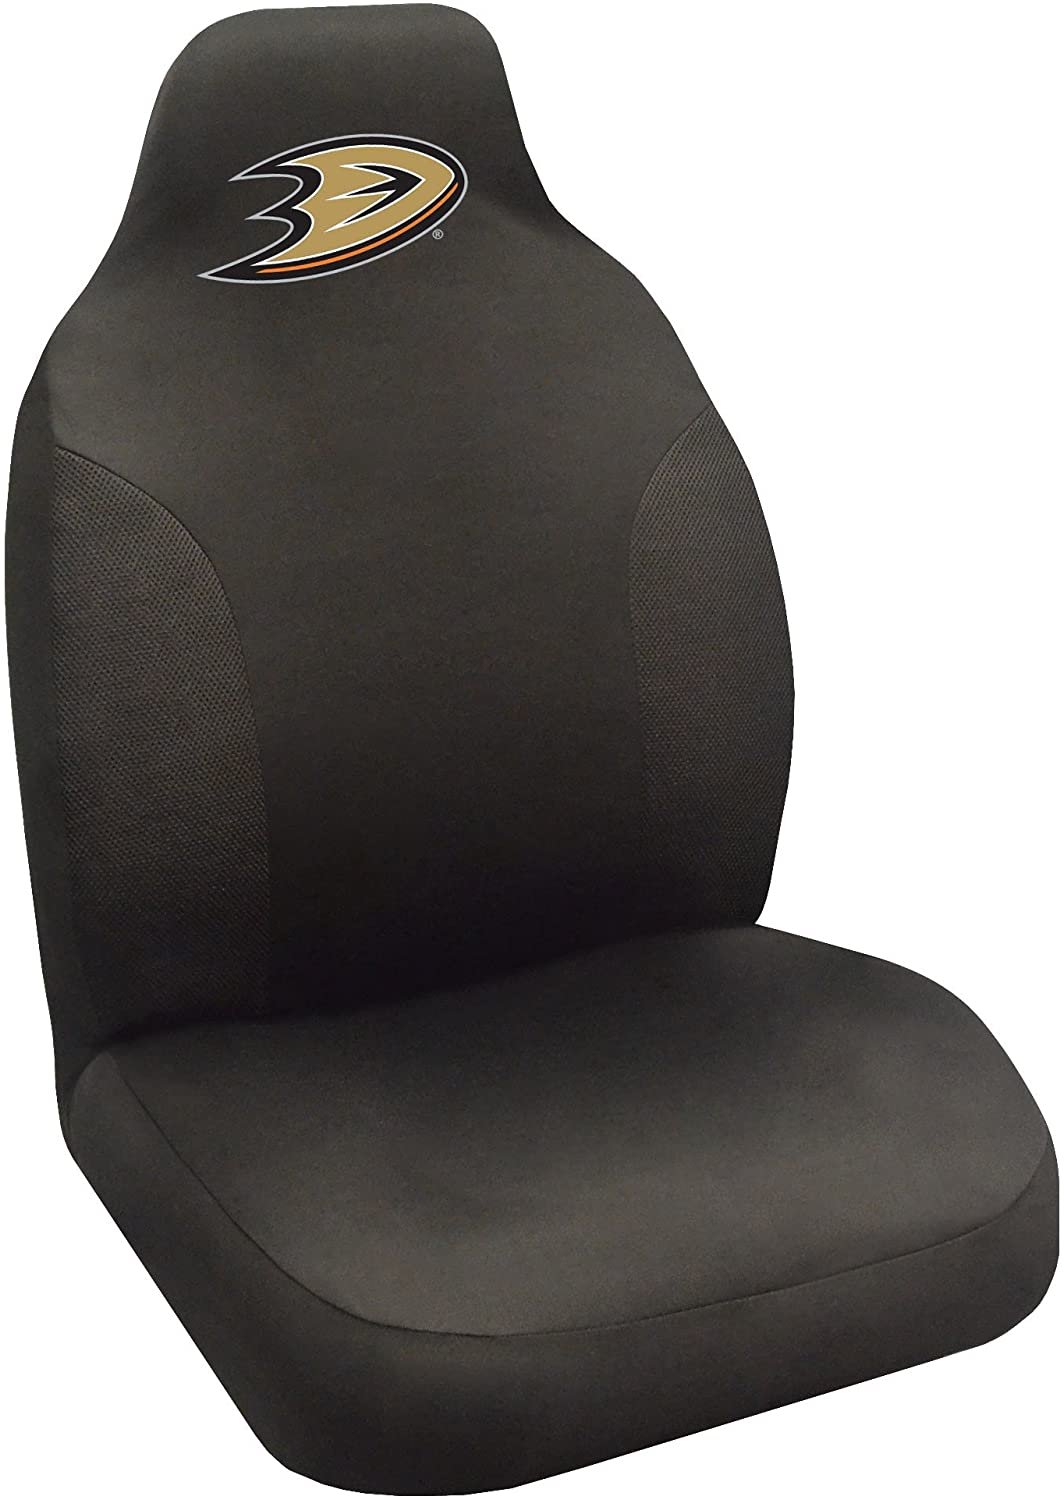 Anaheim Ducks Bucket Auto Seat Cover 48x20 Inch Elastic